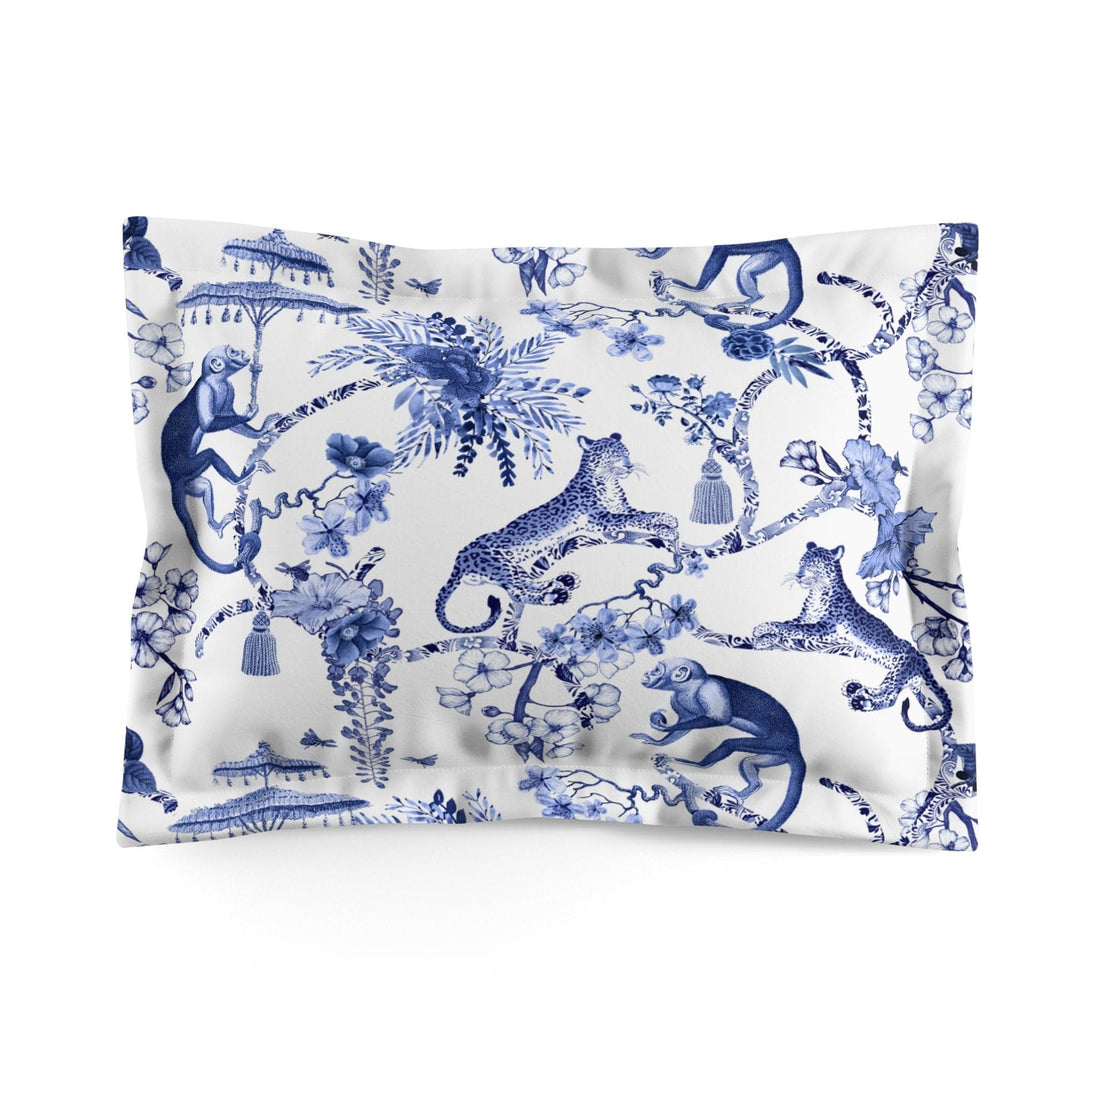 Kate McEnroe New York Chinoiserie Pillow Sham, Botanical Toile Bedding Collection, Chinoiserie Toile Bed Pillows, Floral Blue and White Chinoiserie JunglePillow Shams25997705069546501963